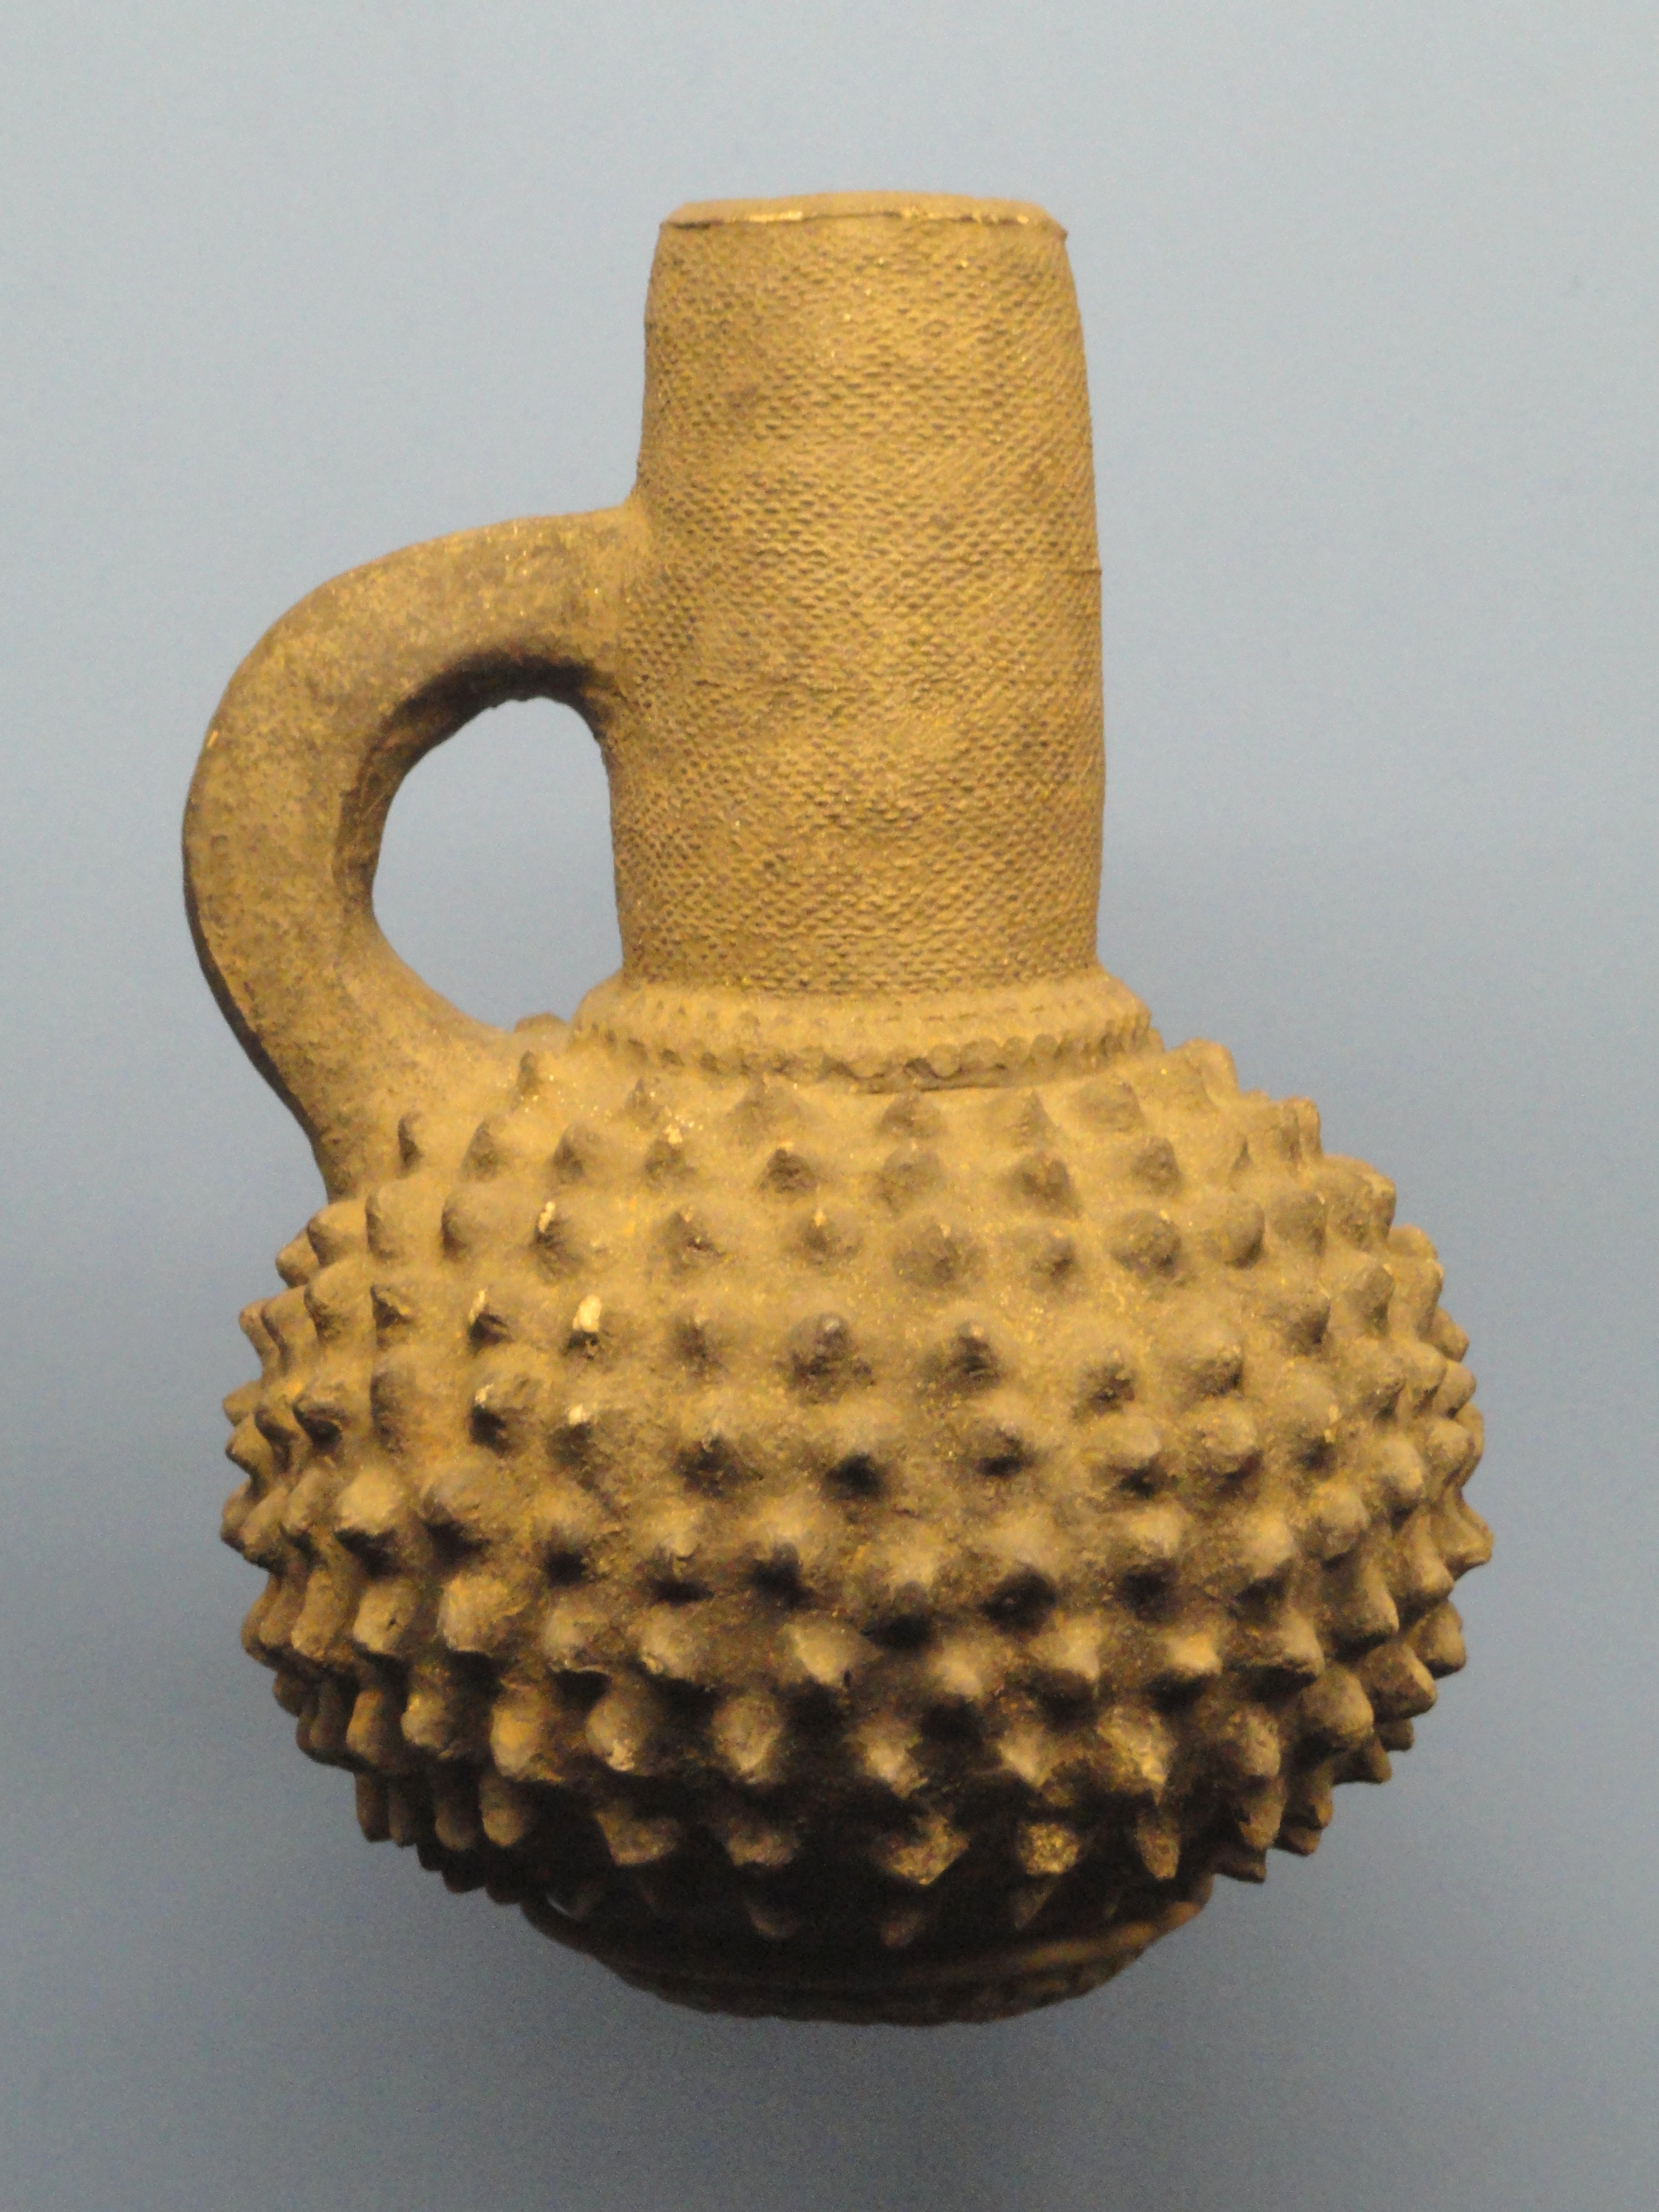 Handmade ceramic pot with lid pot for baking ethnic pottery ceramic art